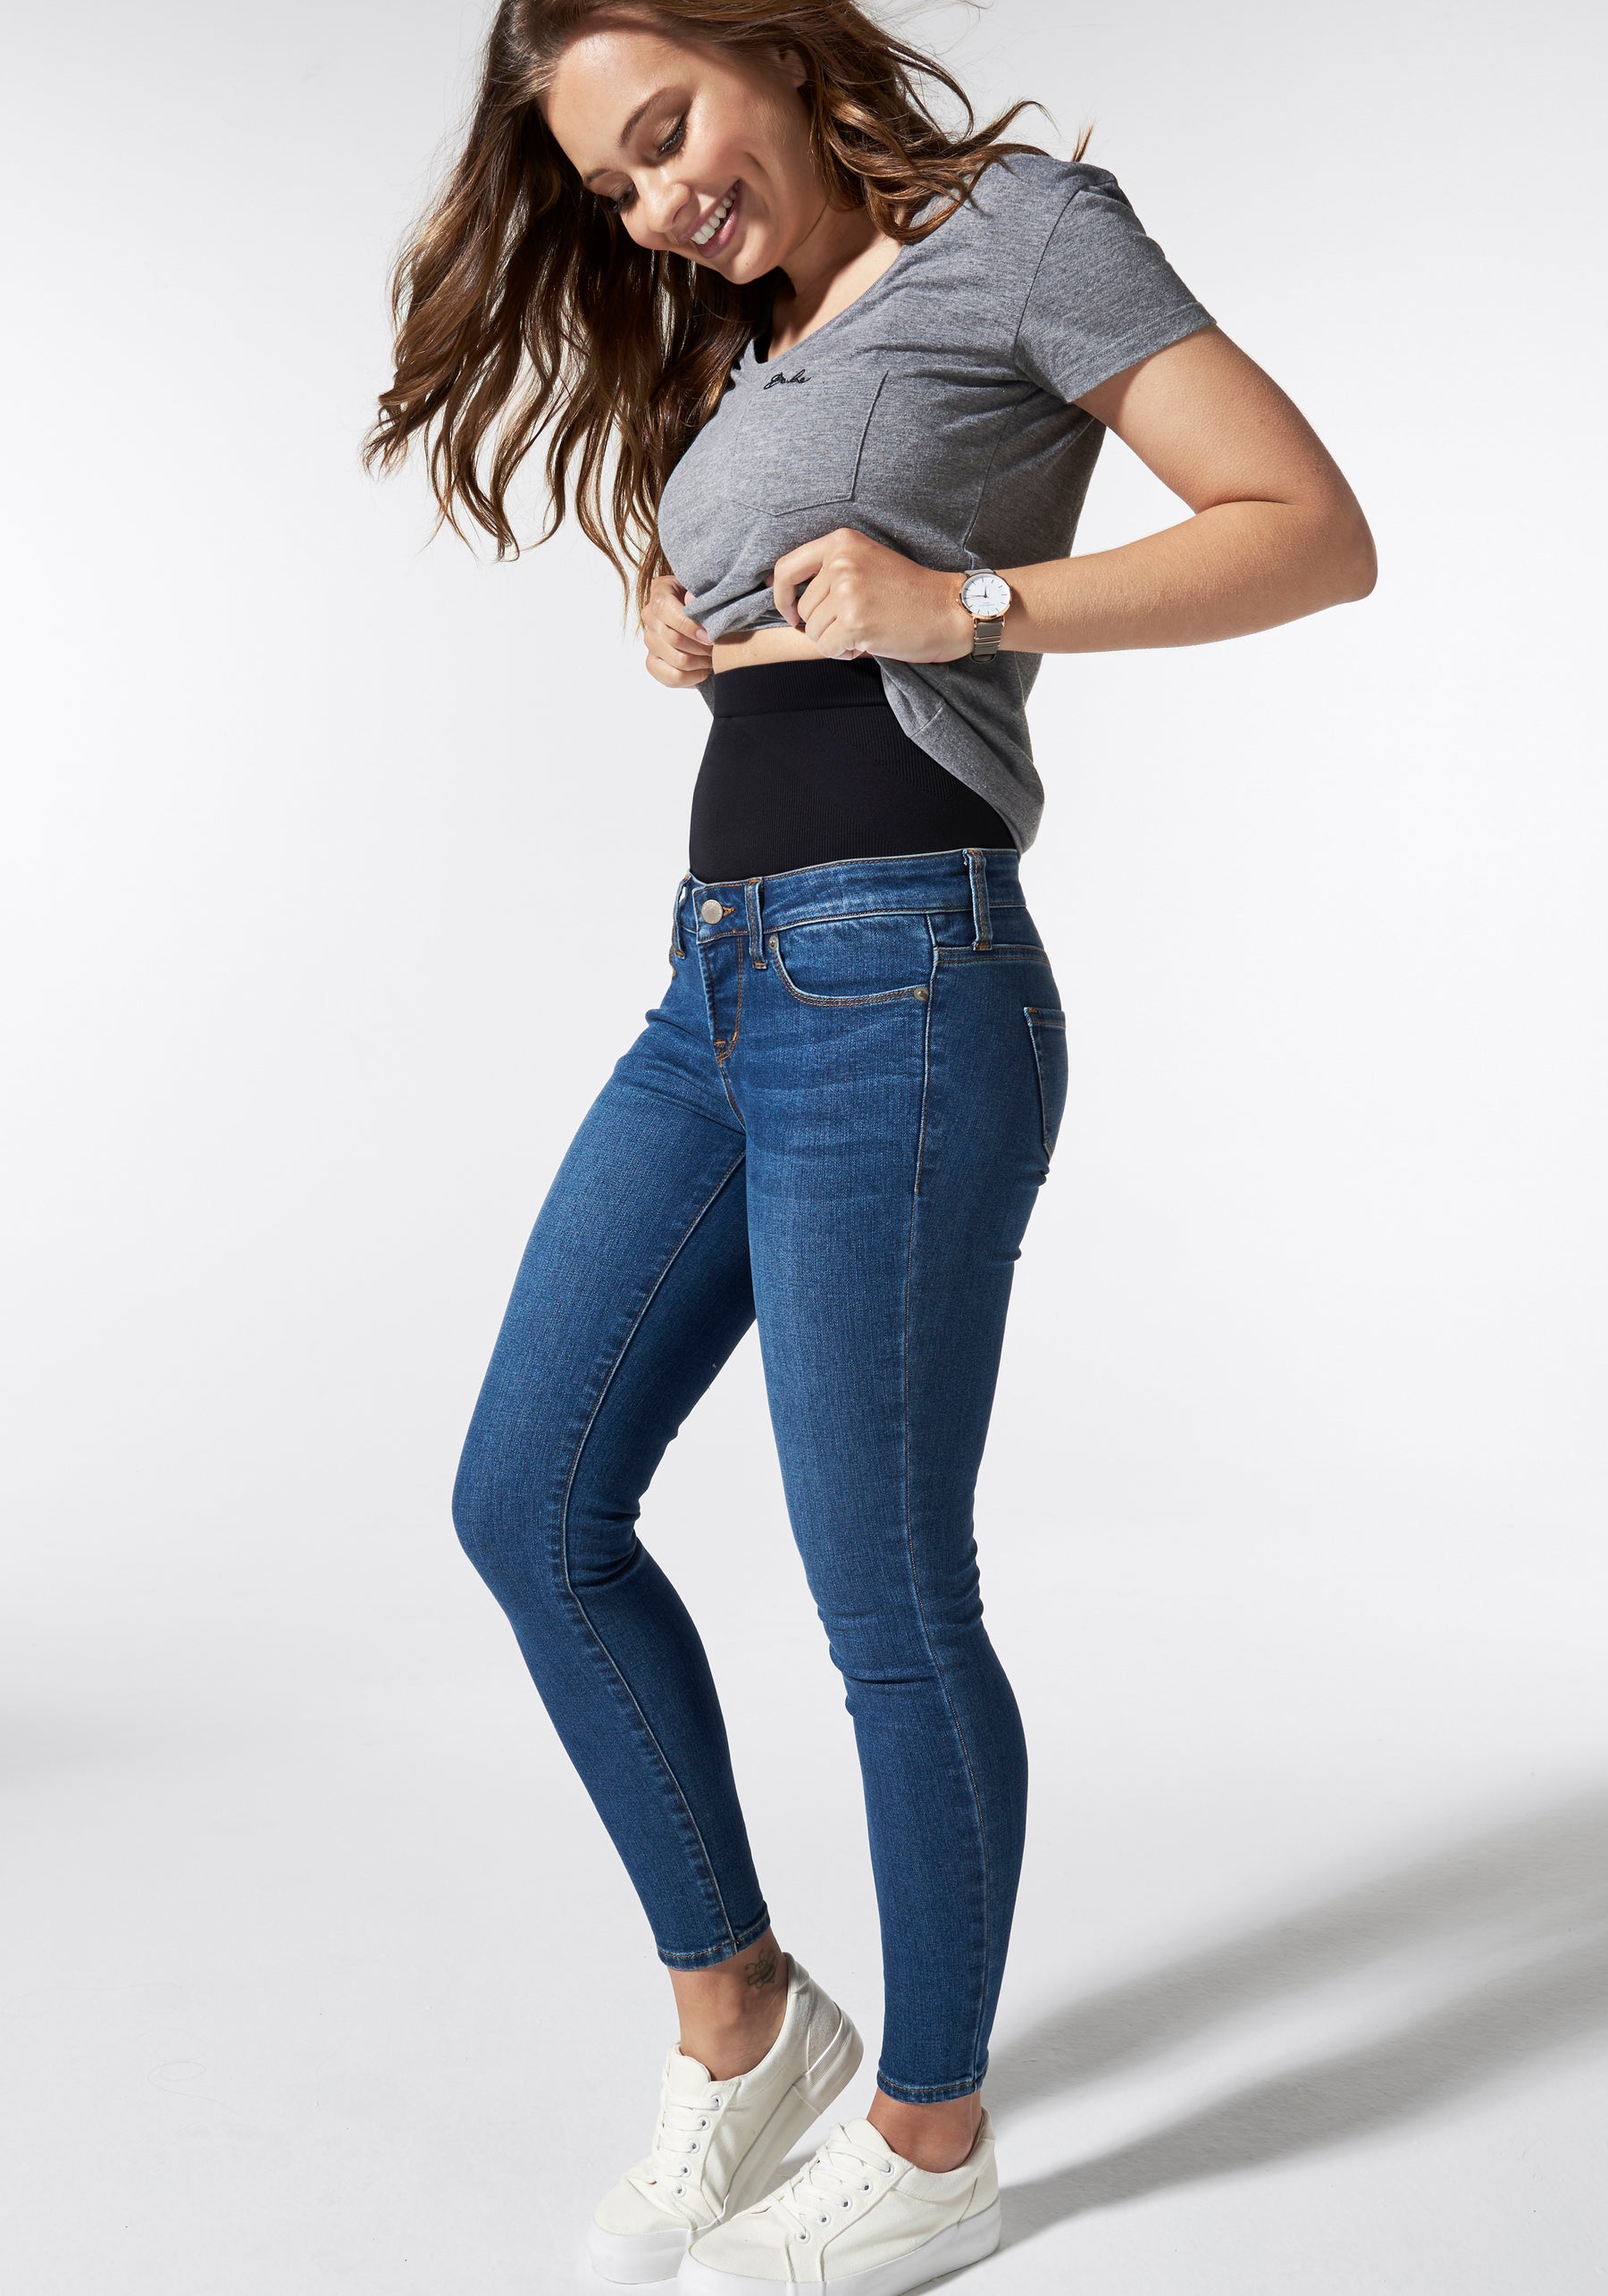 The Best Postpartum Jeans - 12 Women on the Postpartum Jeans That